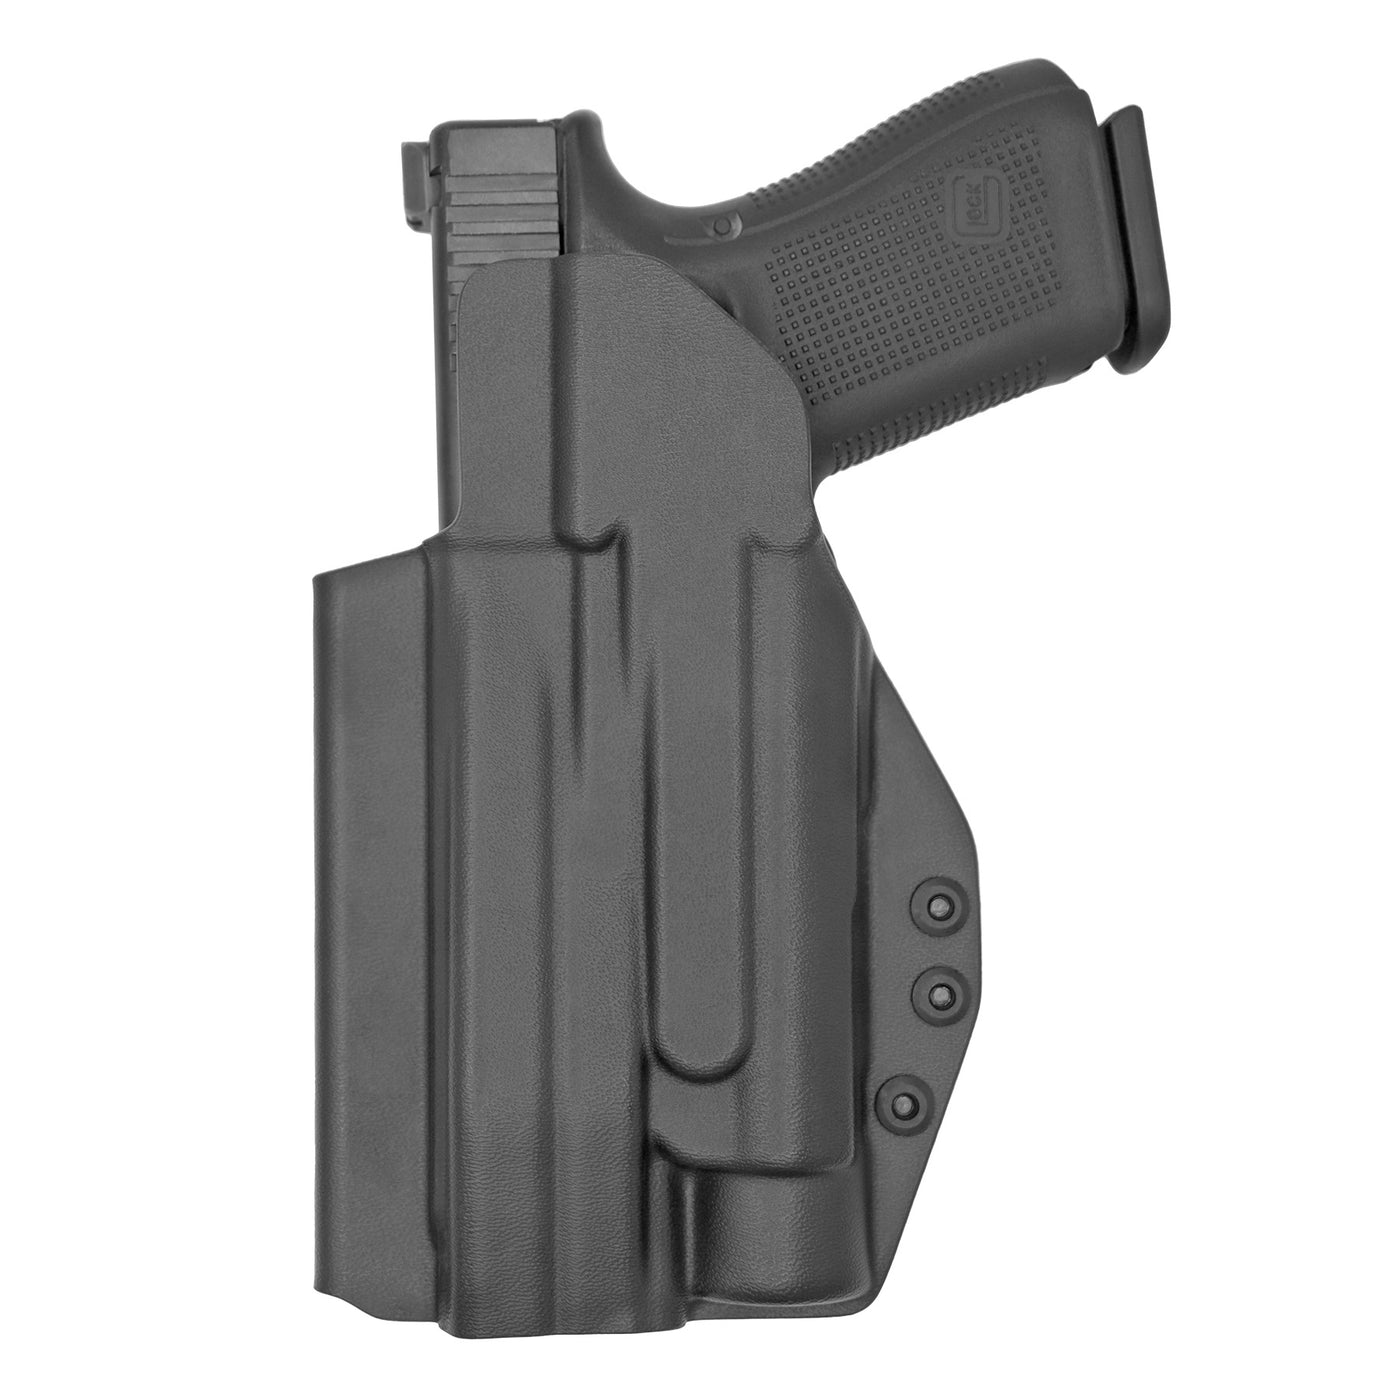 C&G Holsters Glock TLR1 IWB Tactical holster back side